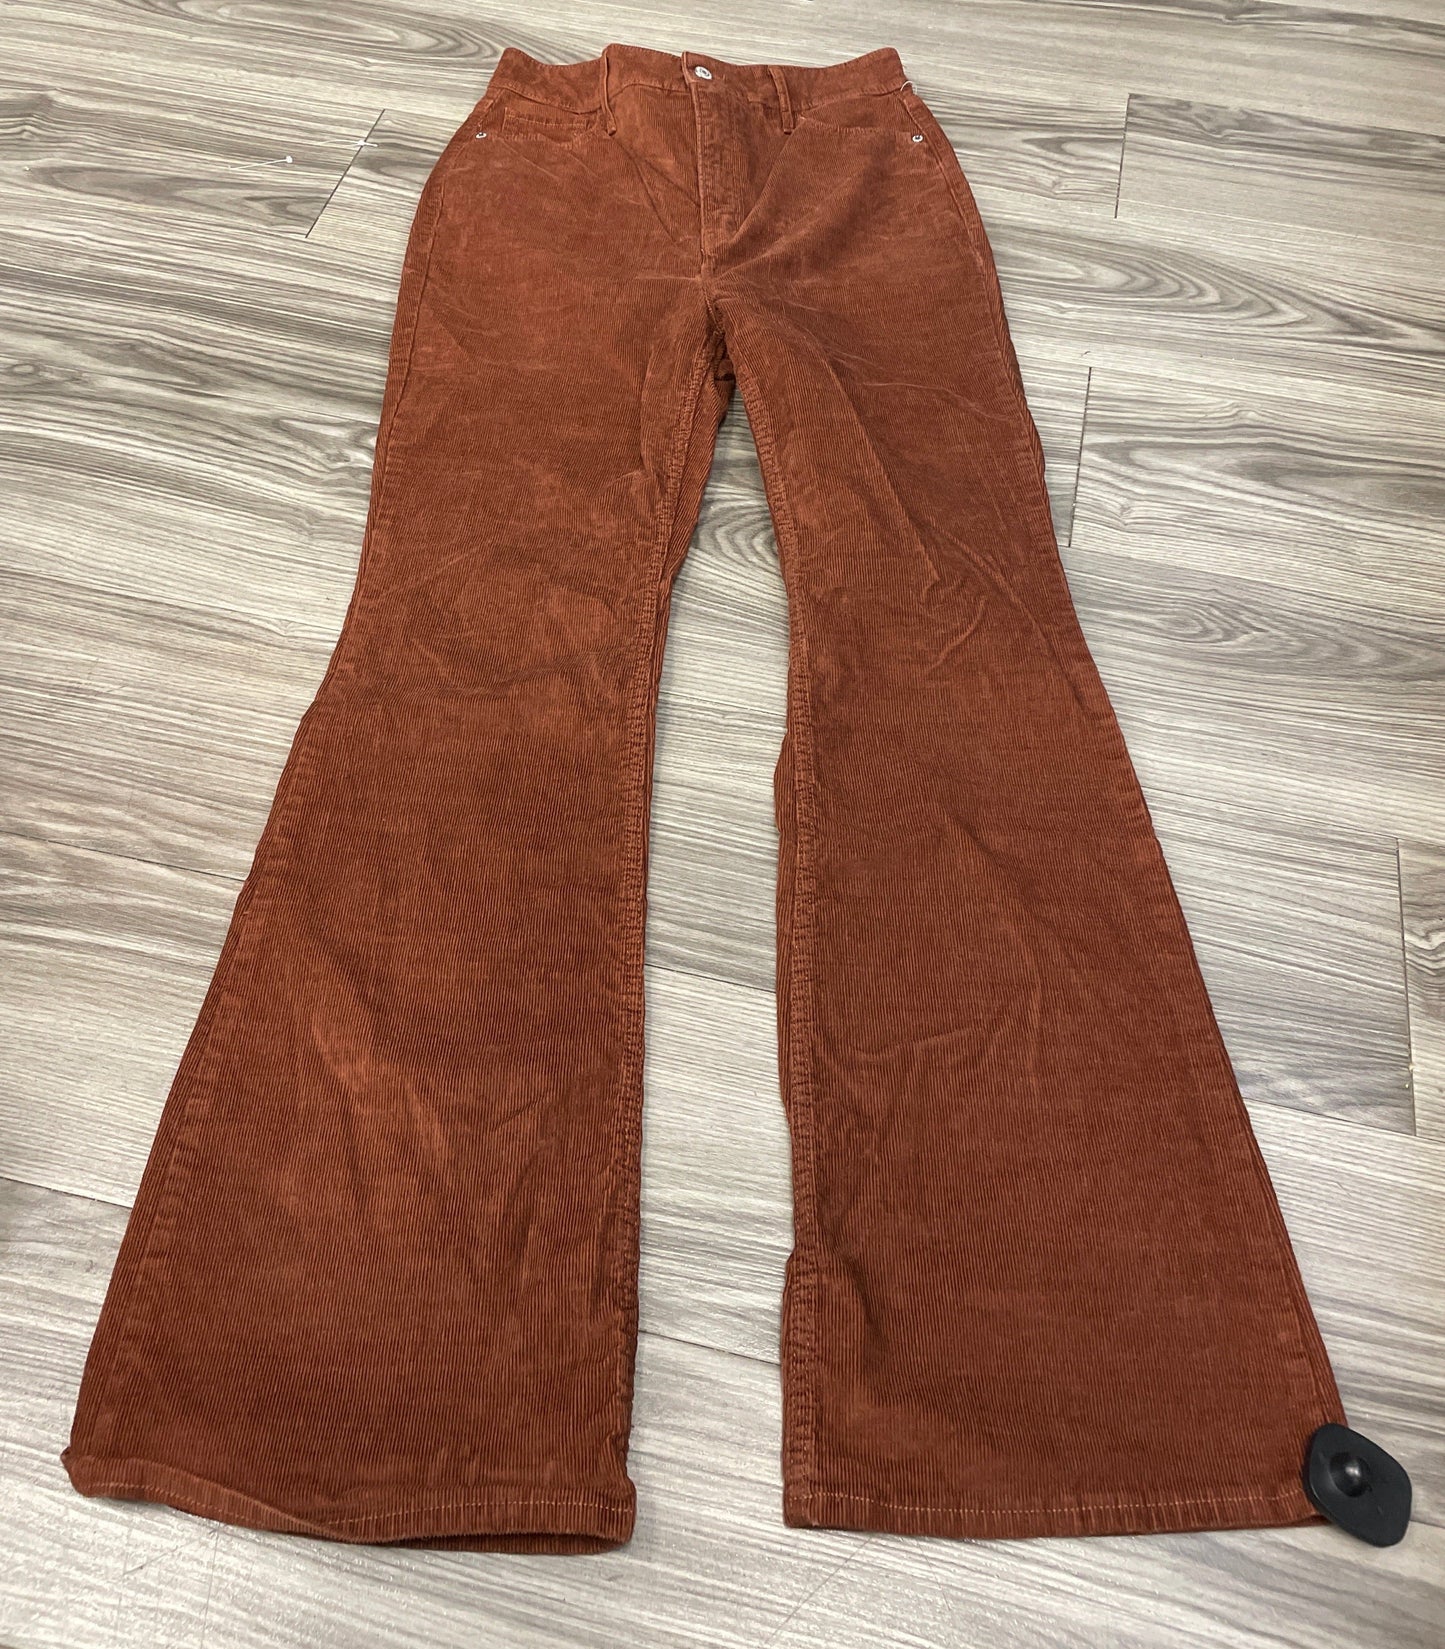 Bronze Pants Corduroy Old Navy, Size 8